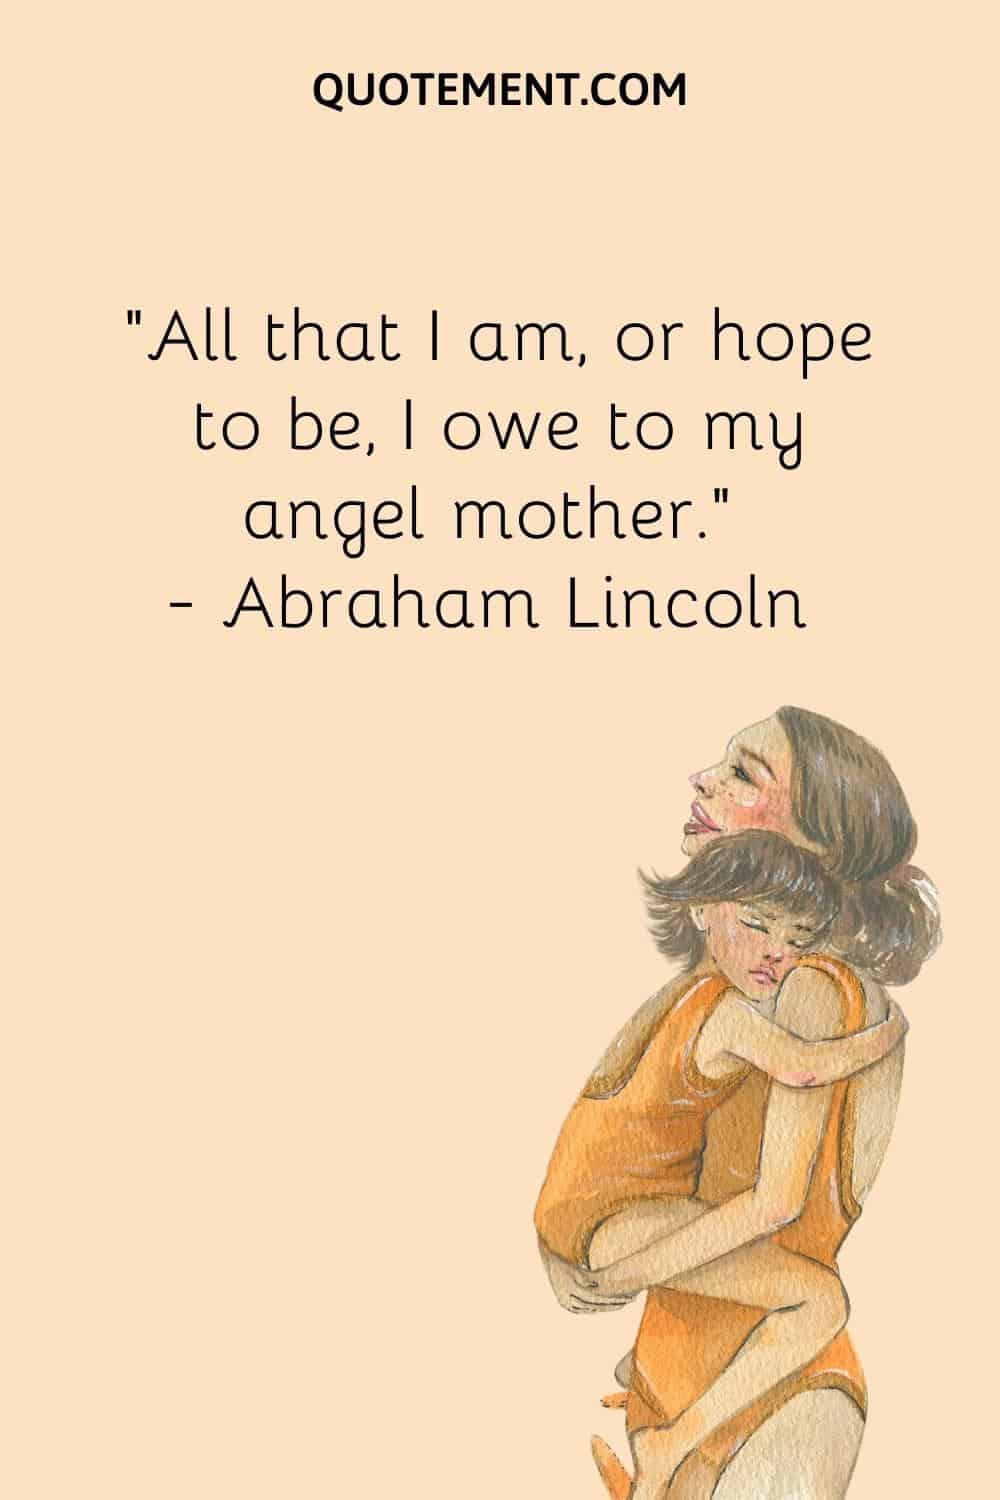 All that I am, or hope to be, I owe to my angel mother. — Abraham Lincoln